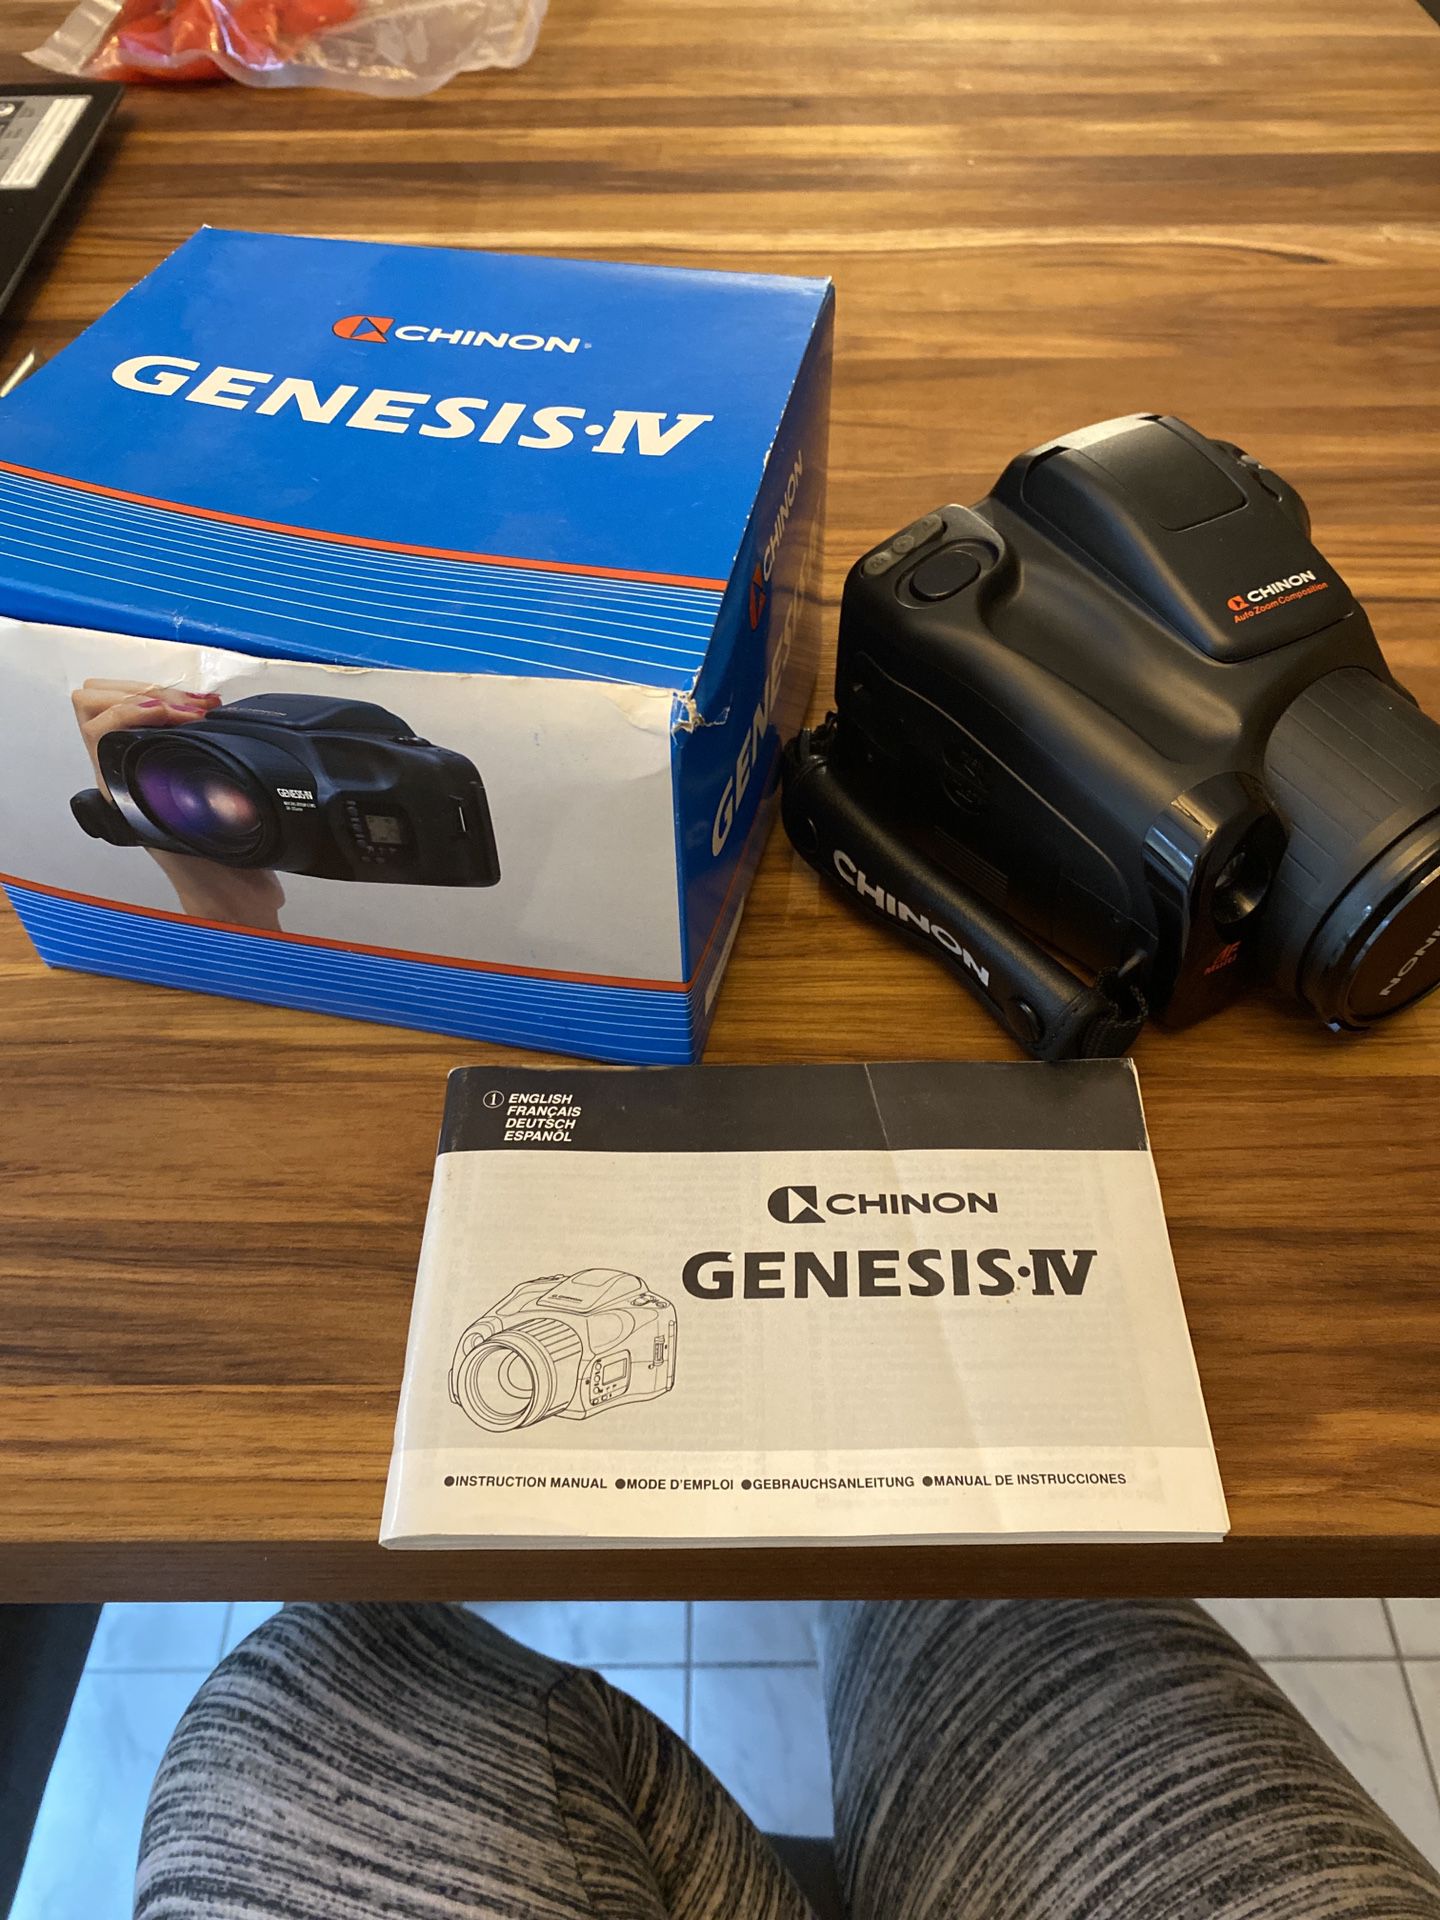 Chinon Genesis IV camera with macro zoom lens